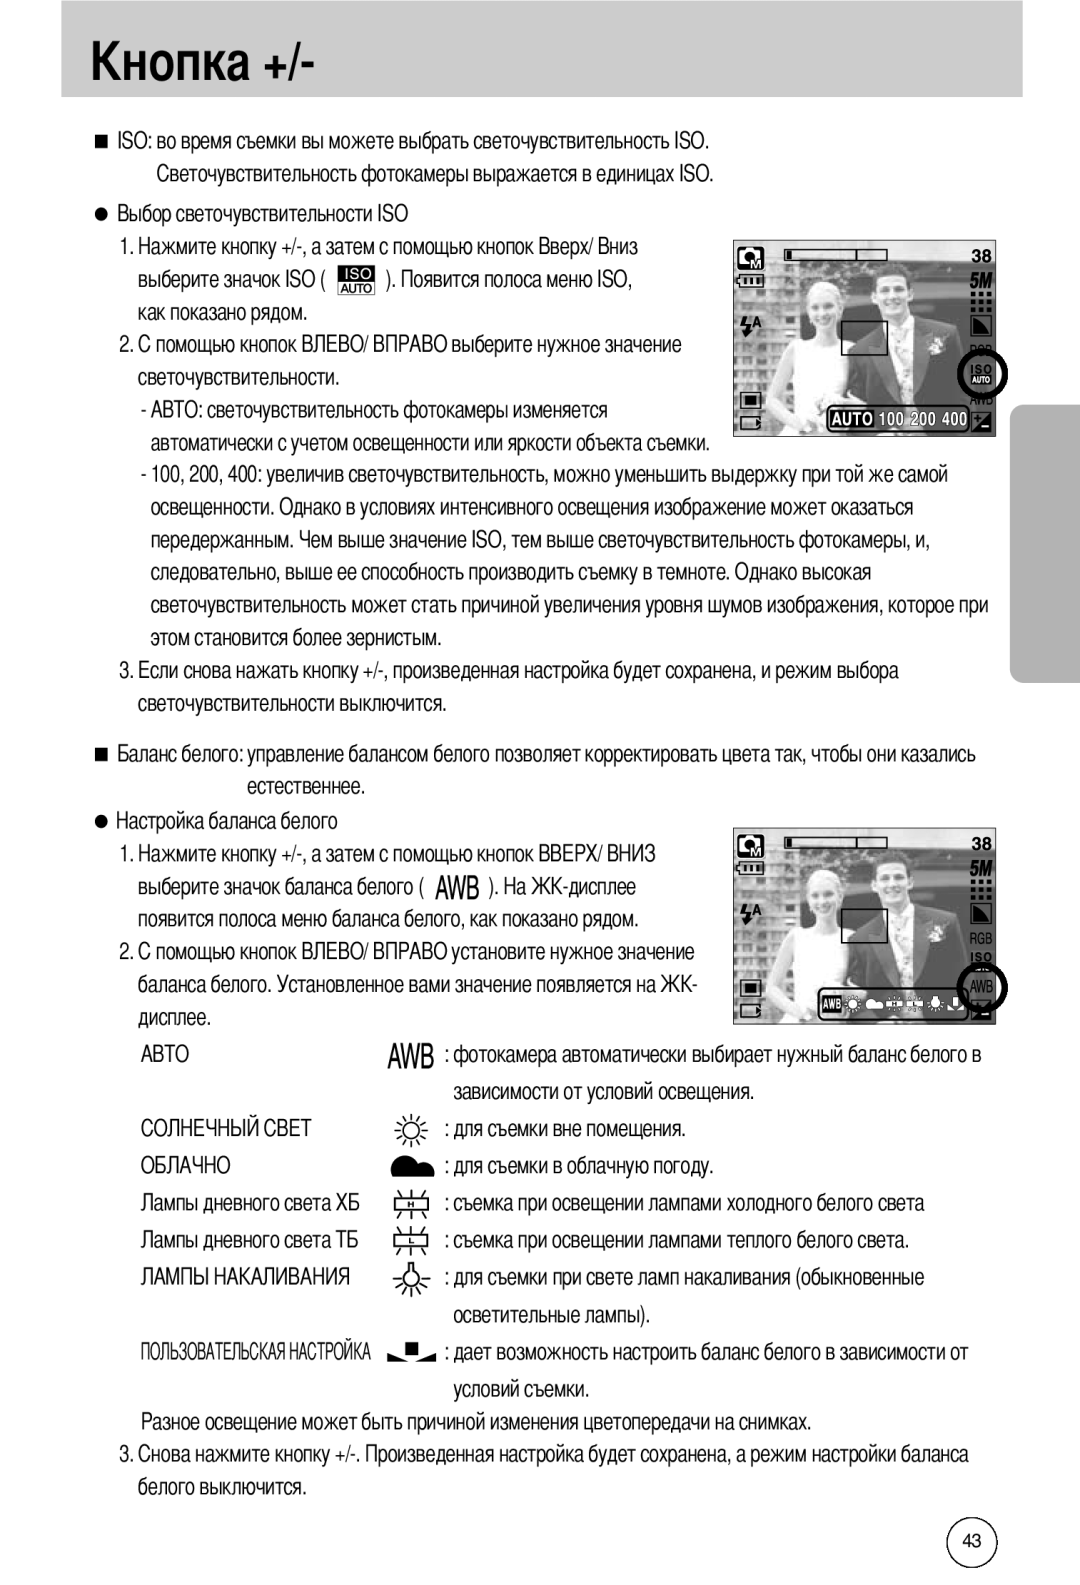 Samsung EC-I50ZZRBA/FR, EC-I50ZZBBA/FR manual как показано рядом, для съемки в облачную погоду, выберите значок ISO 